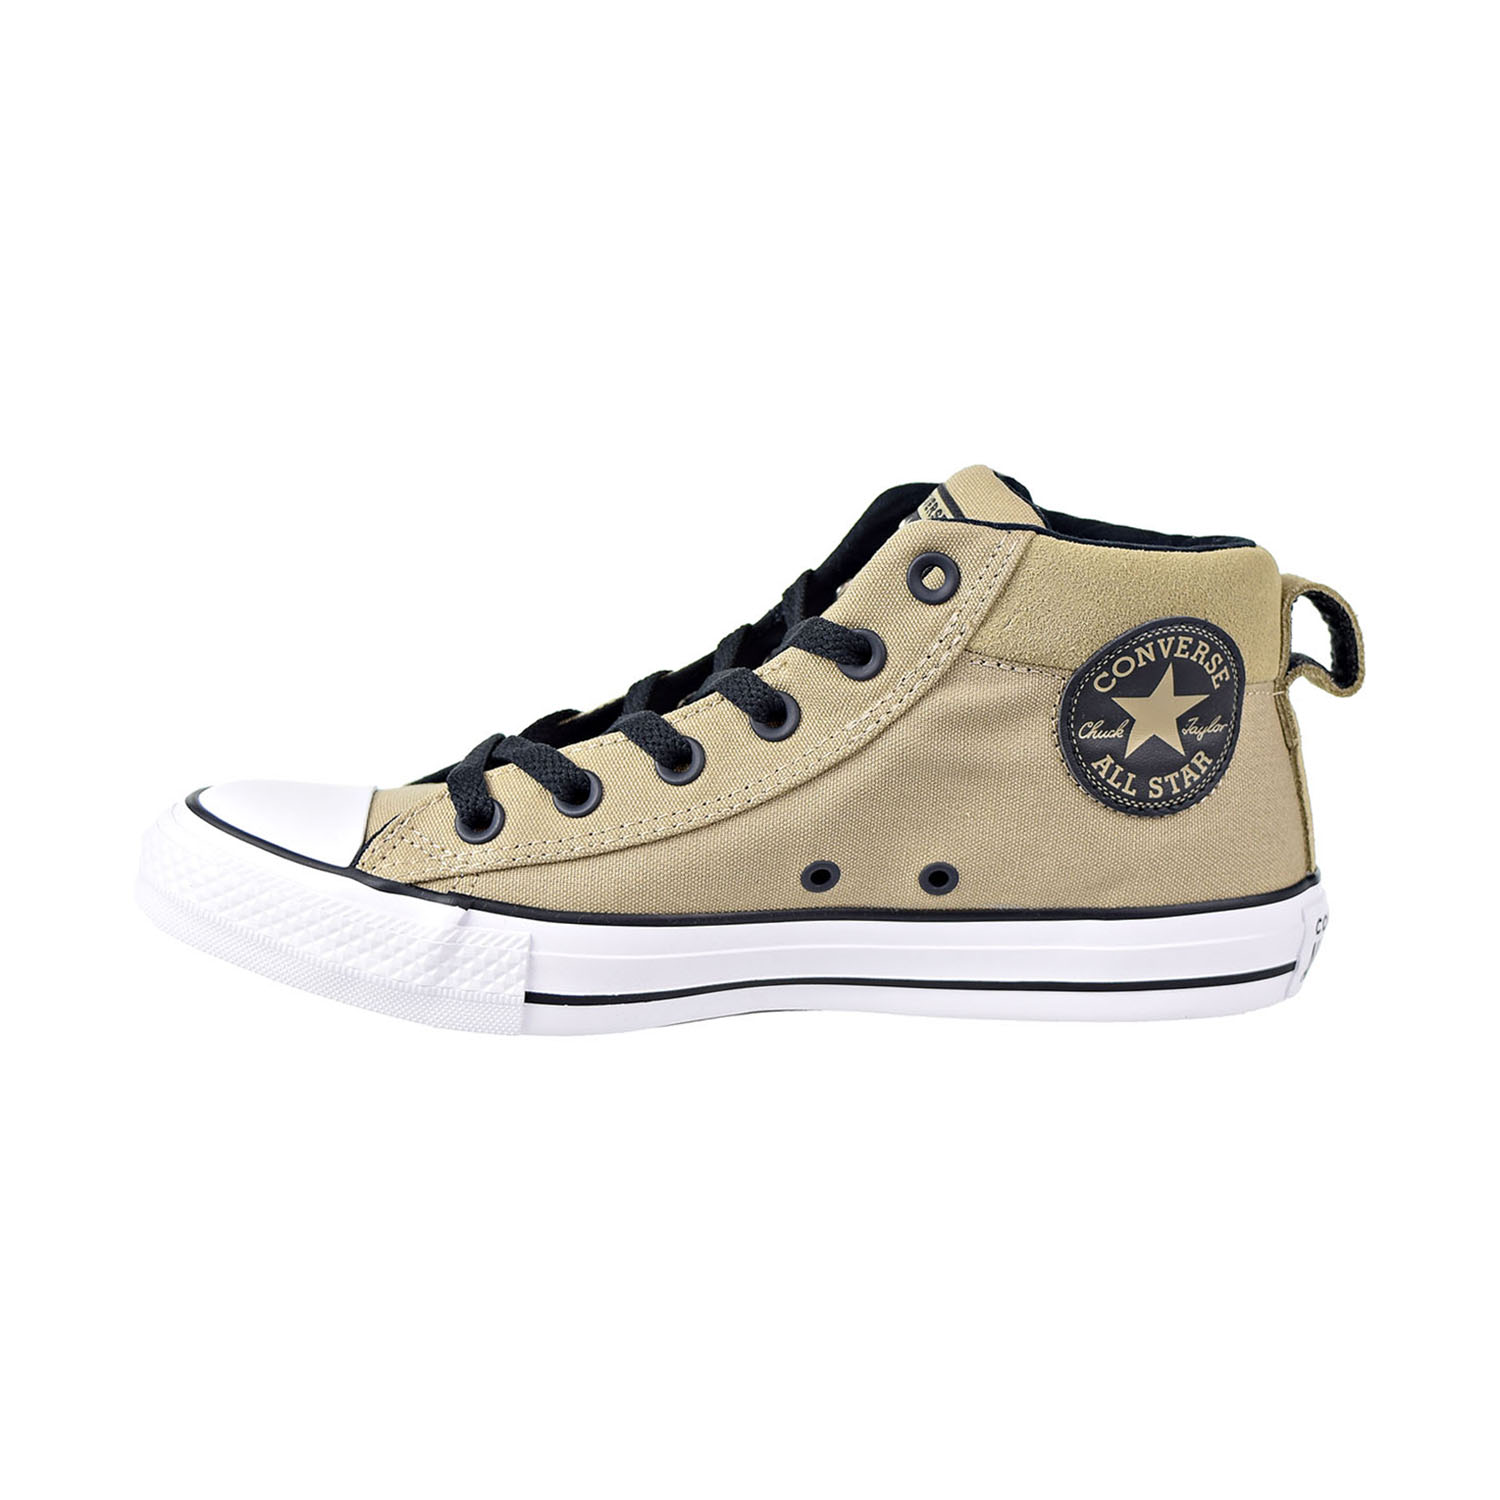 Converse Chuck Taylor All Star Street Mid Unisex Shoes Khaki/Black/White 163401c - image 4 of 6